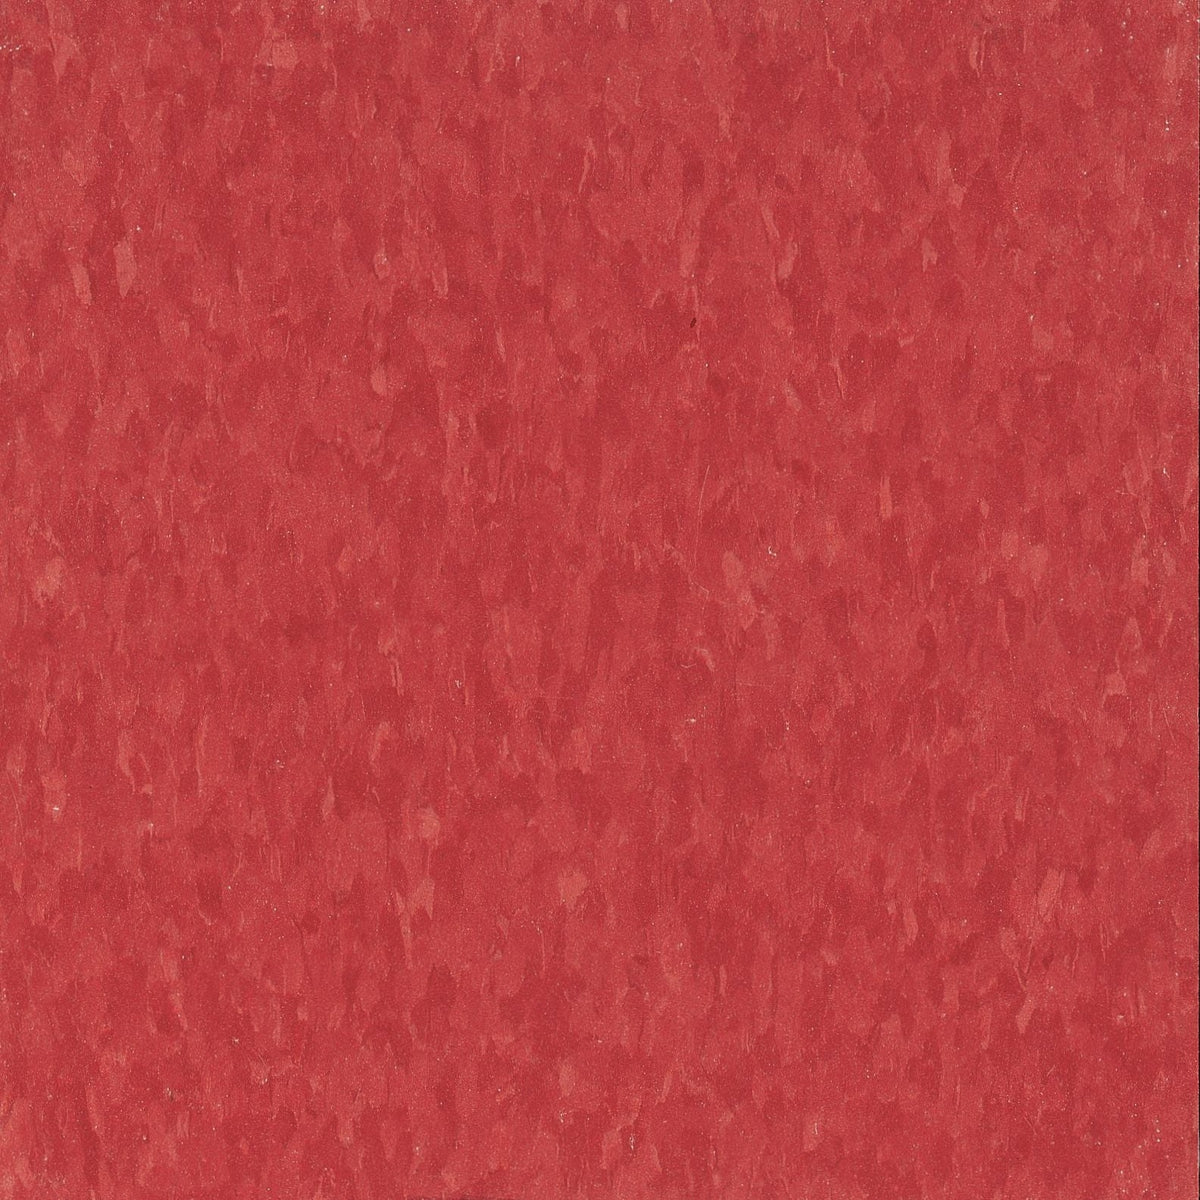 Armstrong Commercial - Standard Excelon Imperial Texture - Vinyl Composition Tile (VCT) - Maraschino